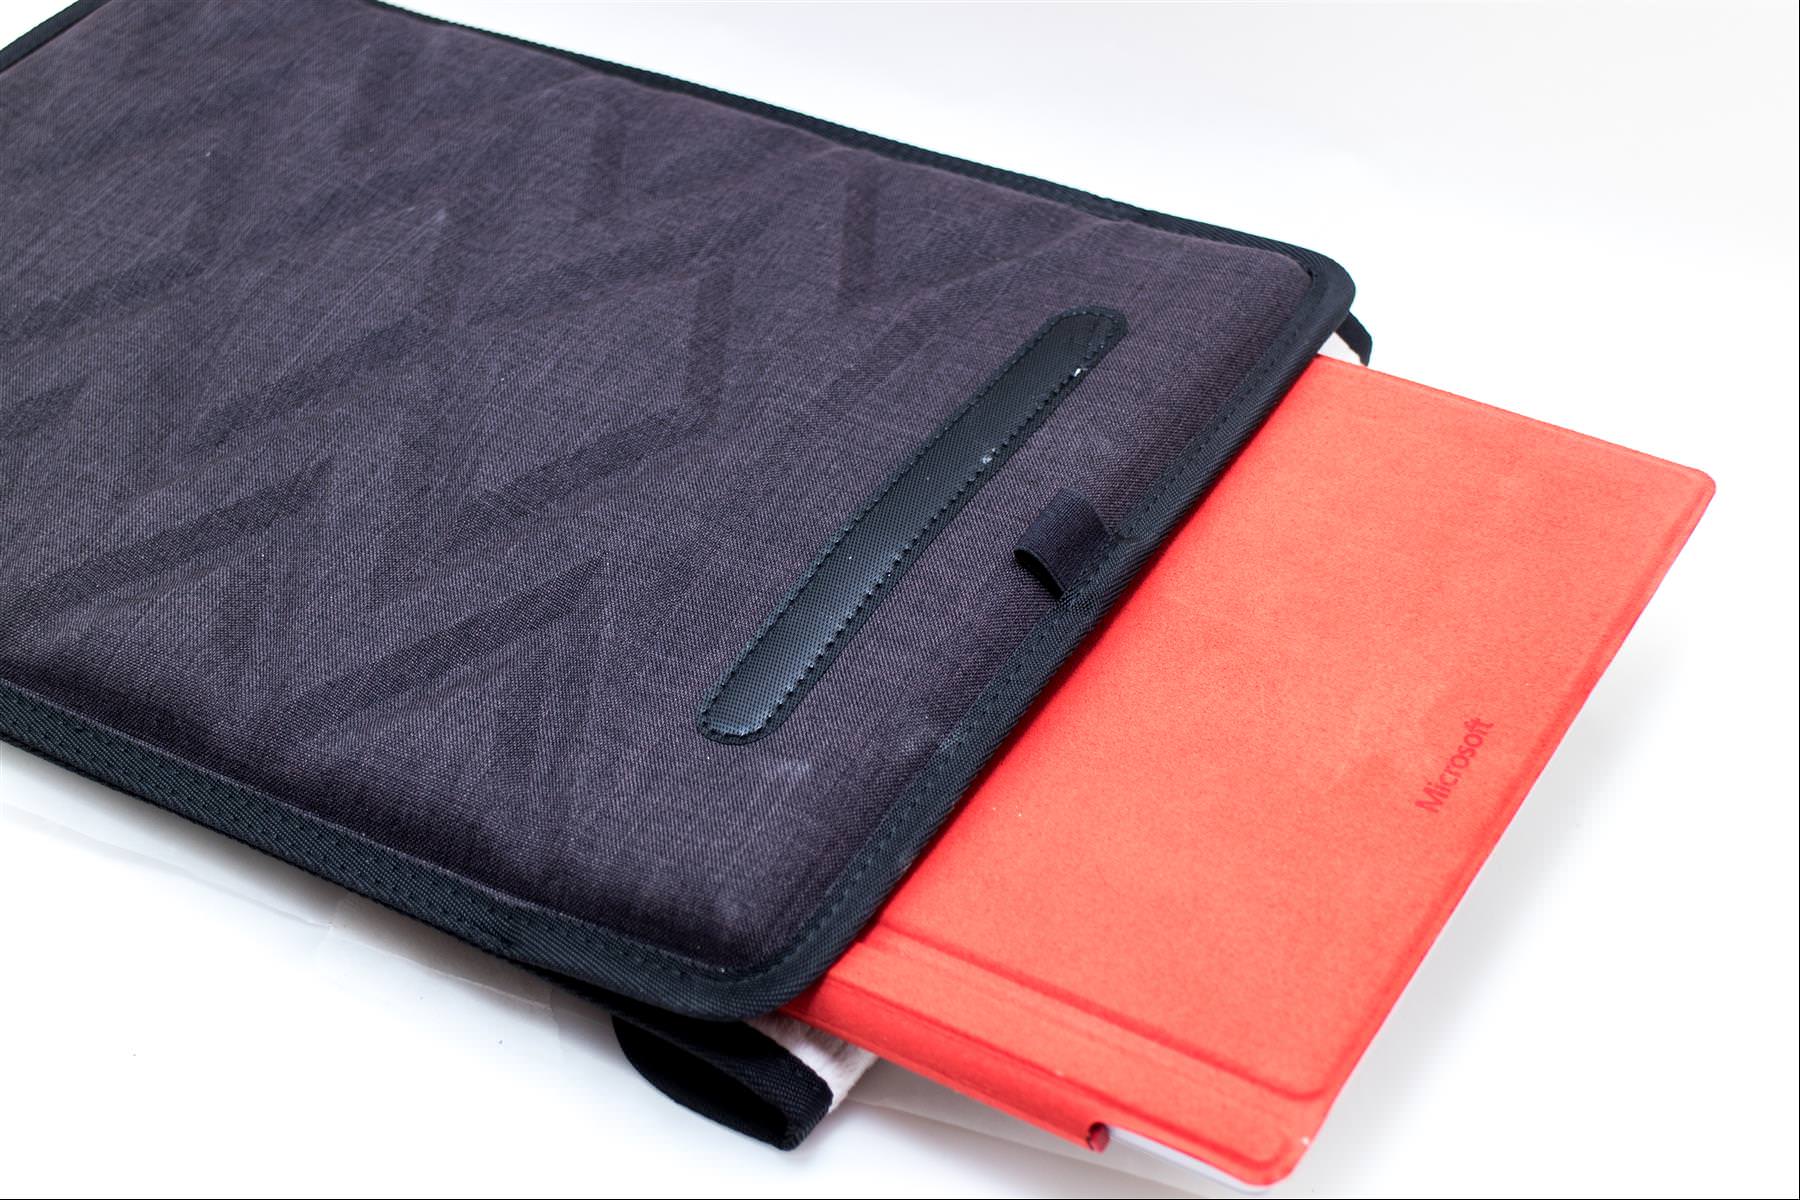 [3C開箱] Targus PRO-TEK 筆電袋，堅韌輕薄設計，給你最珍貴的筆電完善的保護